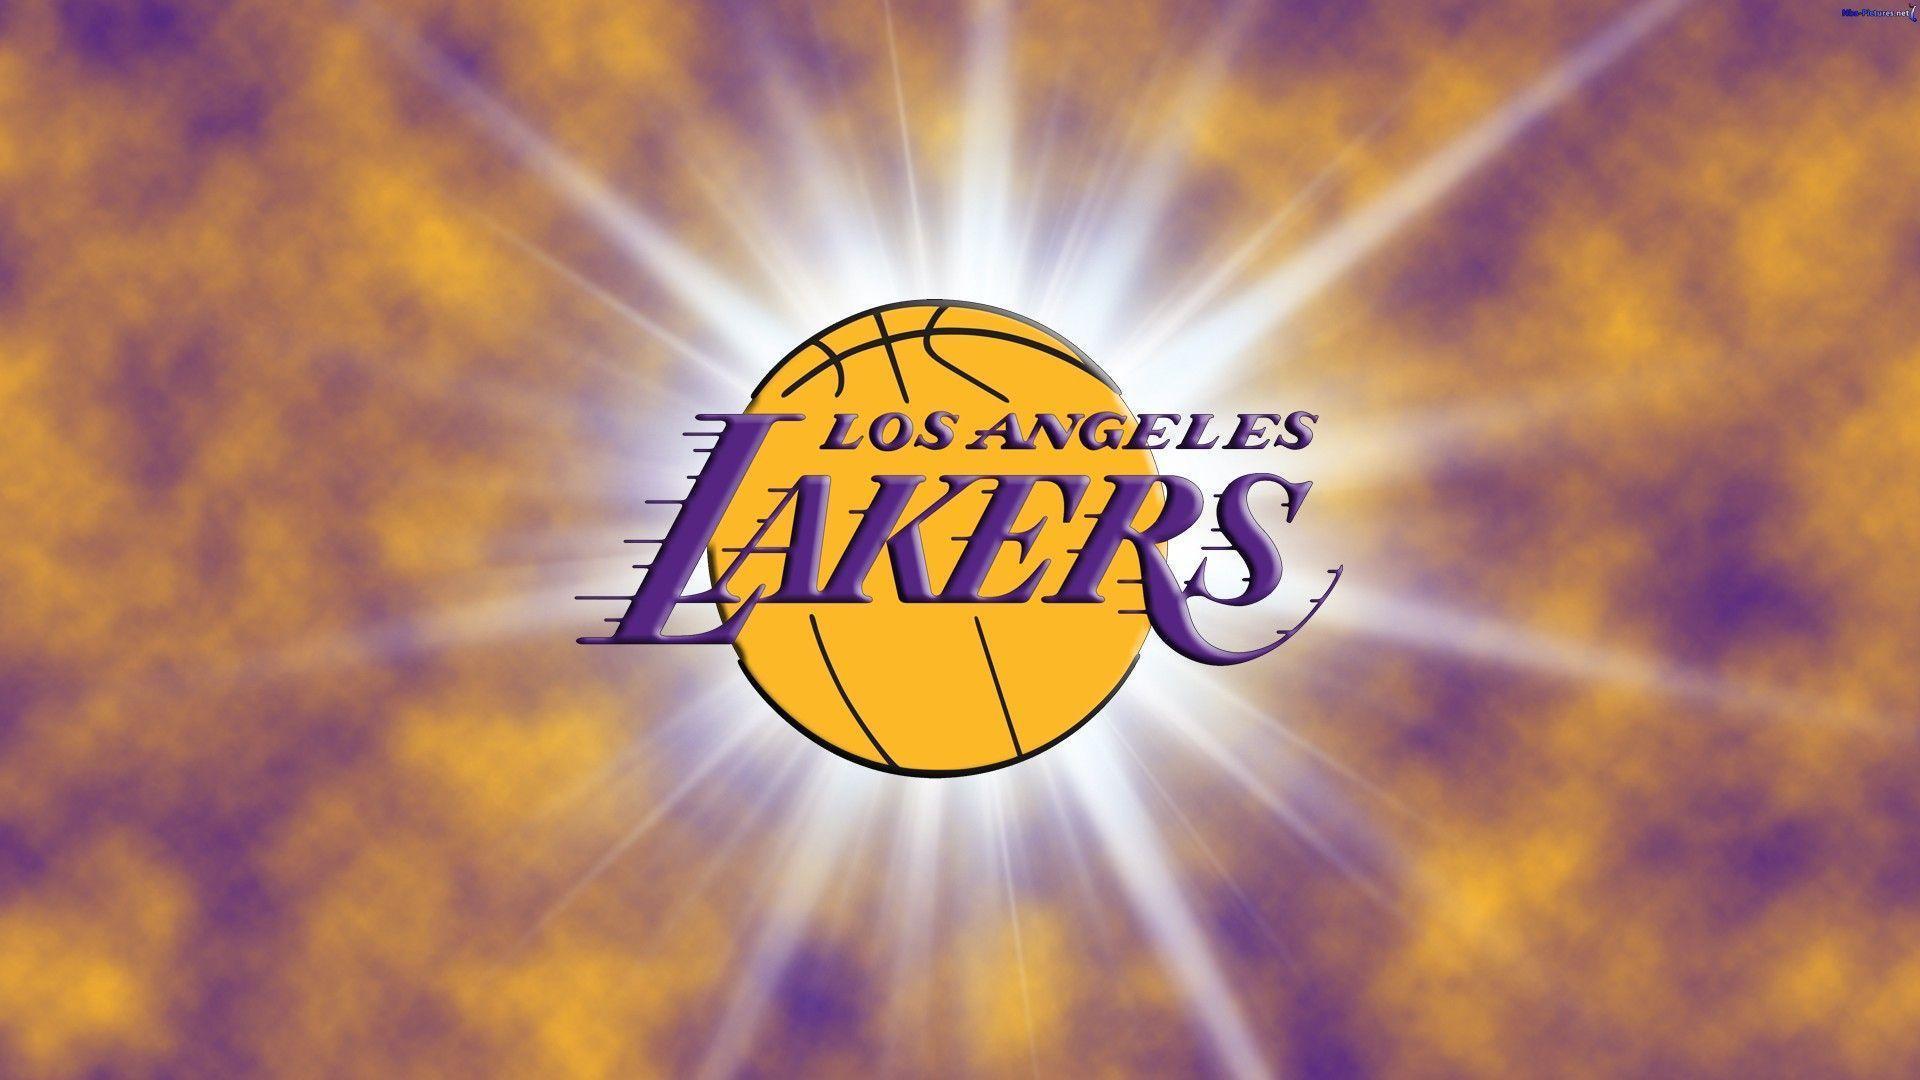 Los Angeles Lakers Logo Image